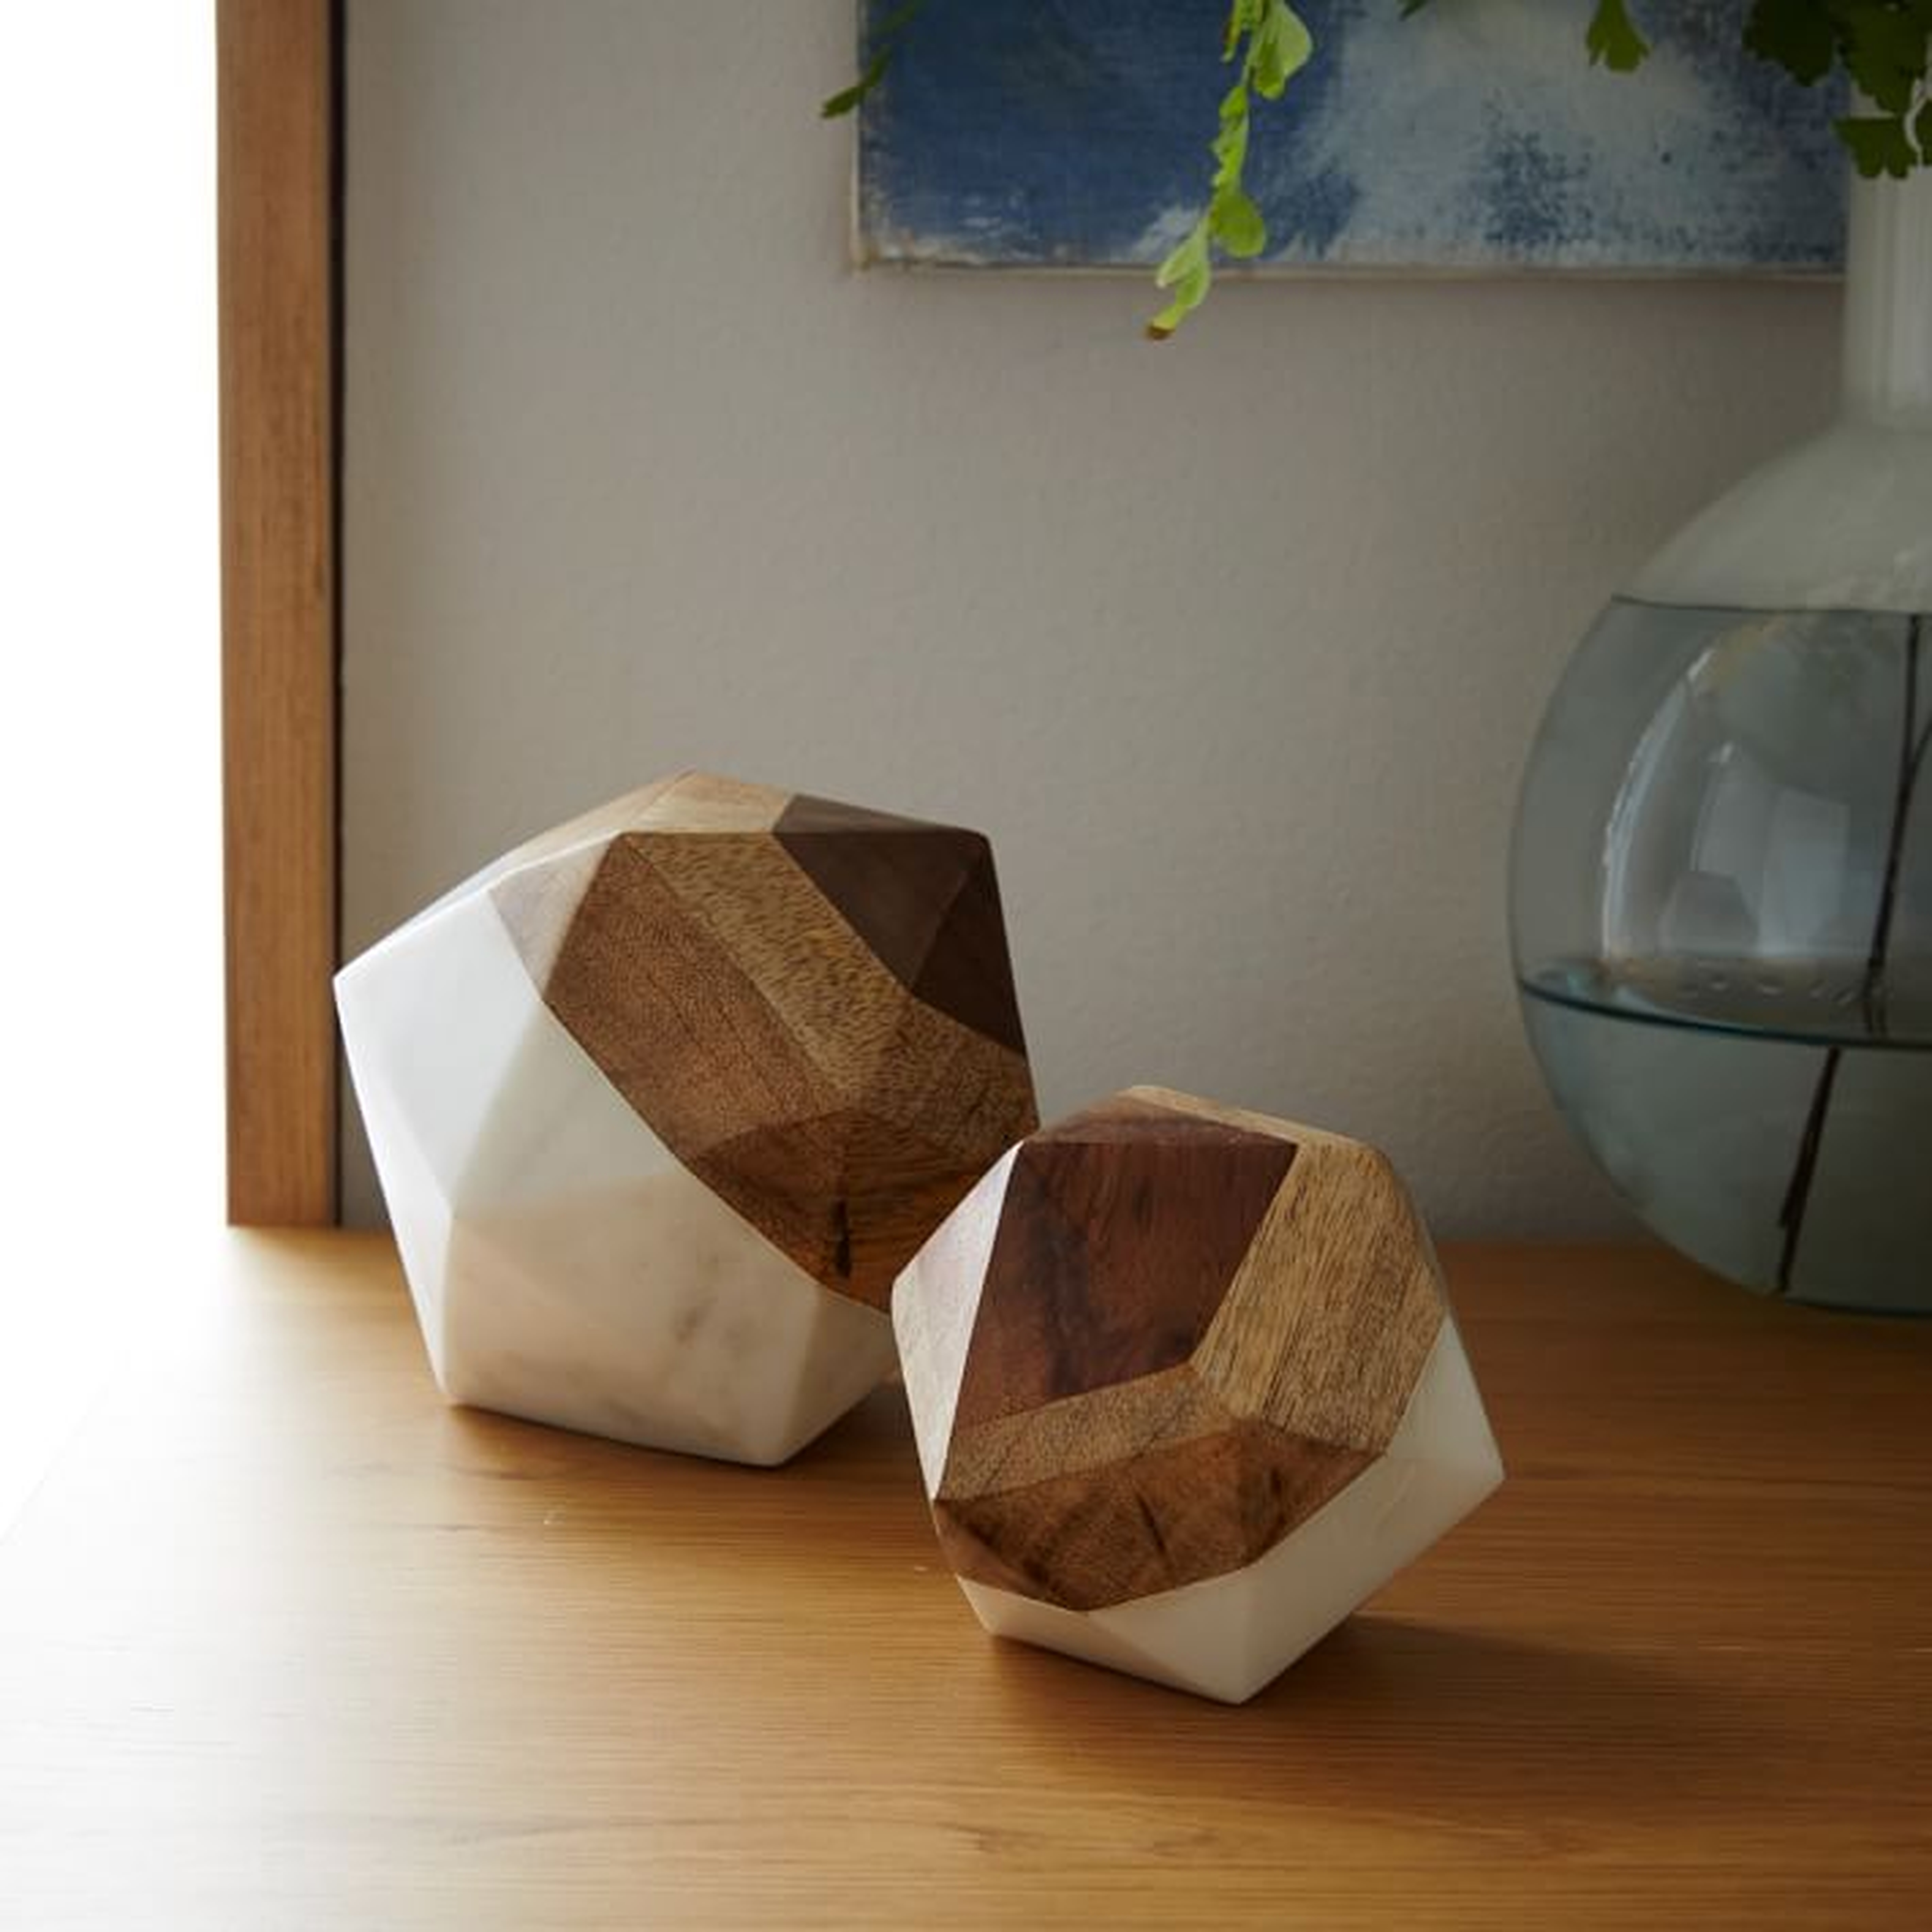 Marble + Wood Geometric Objects - West Elm